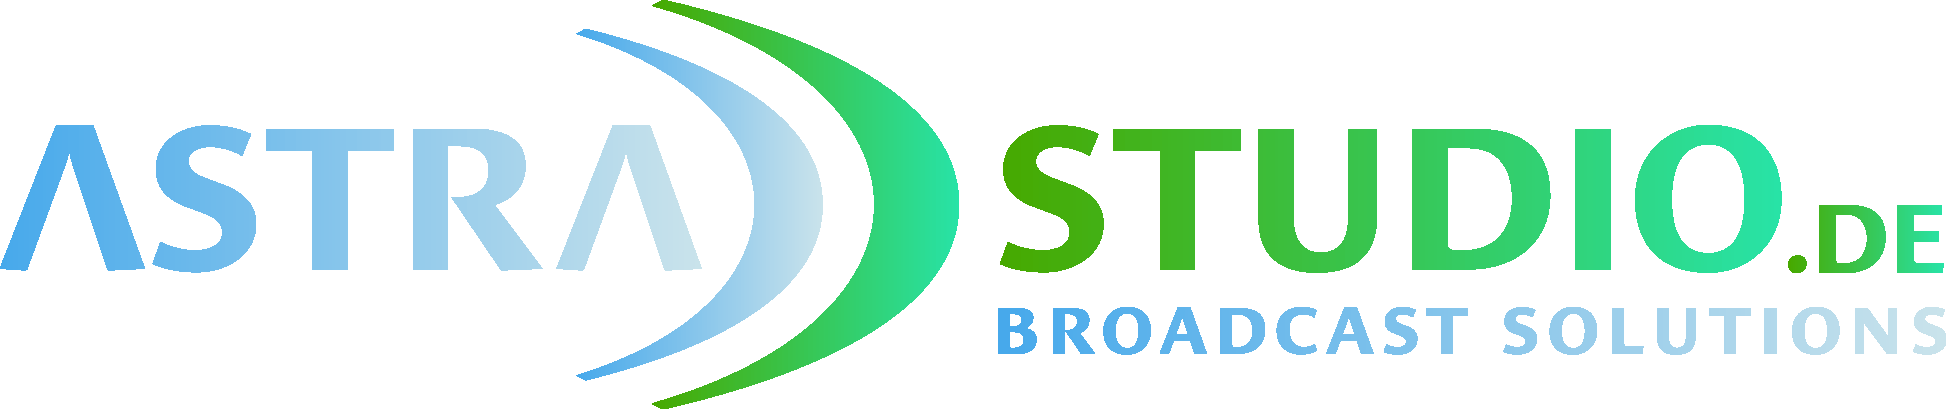 astrastudio broadcast solutions